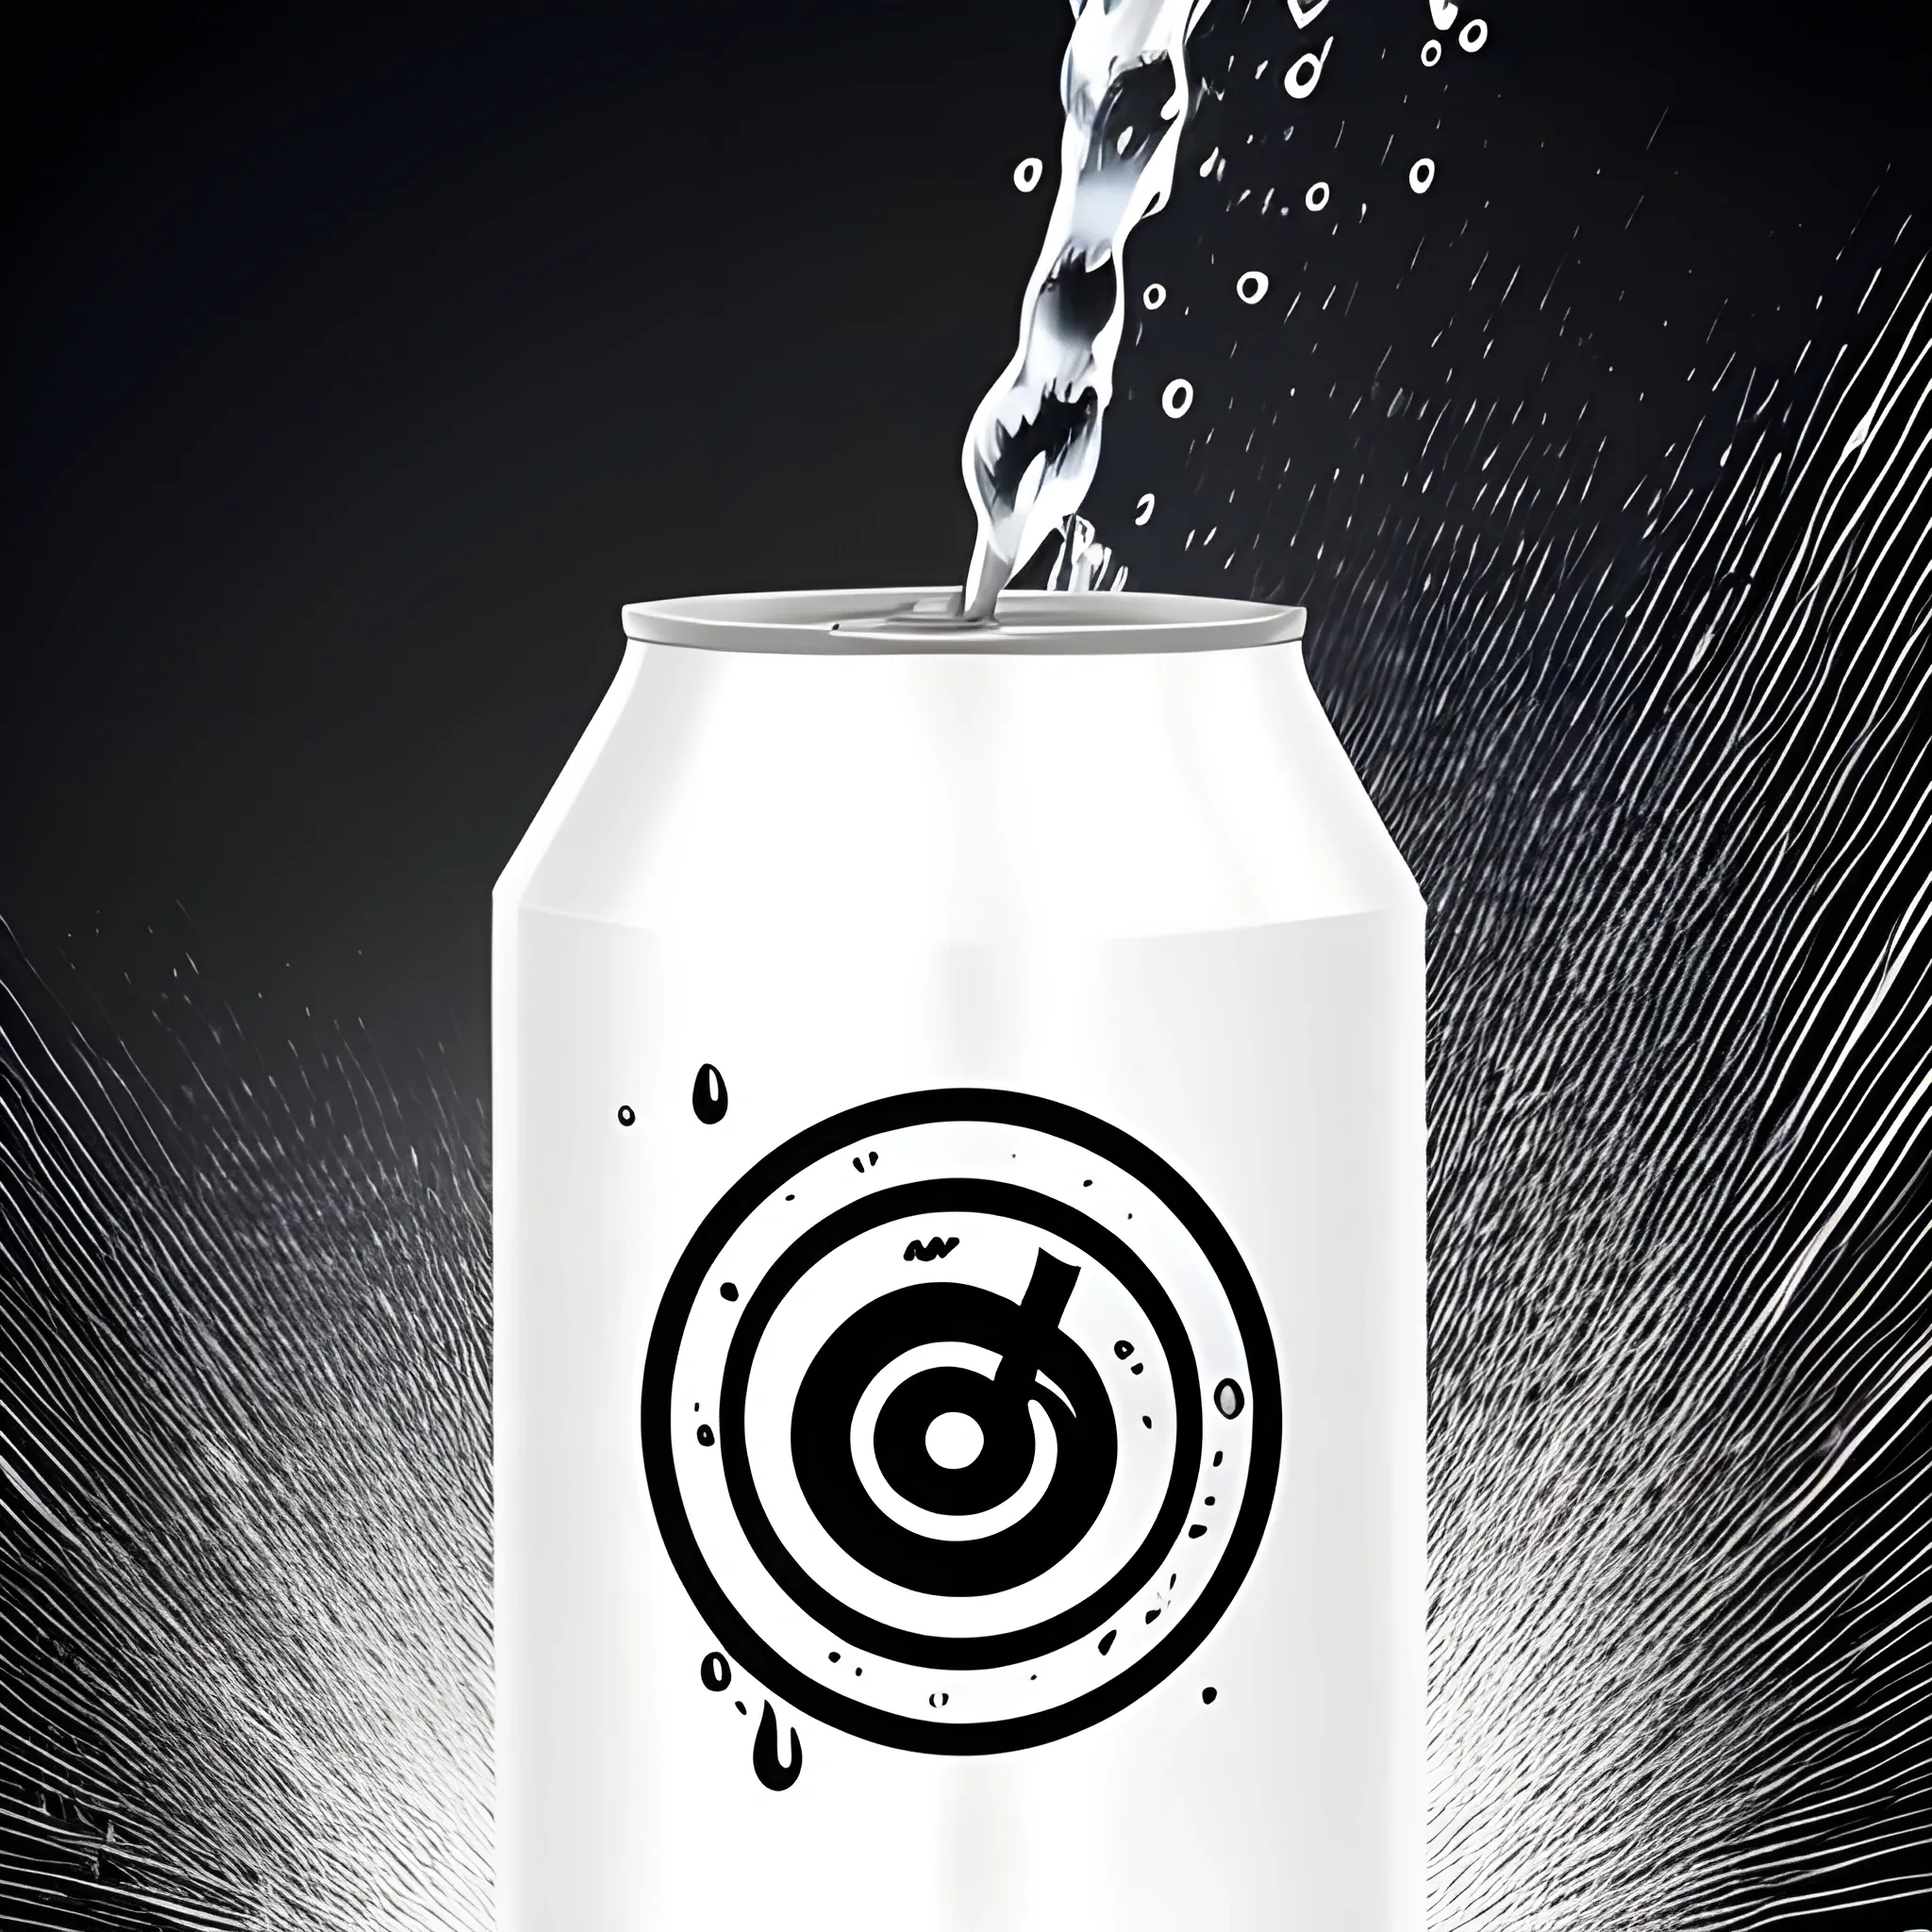 soda can with anonima logo water drip background, Cartoon